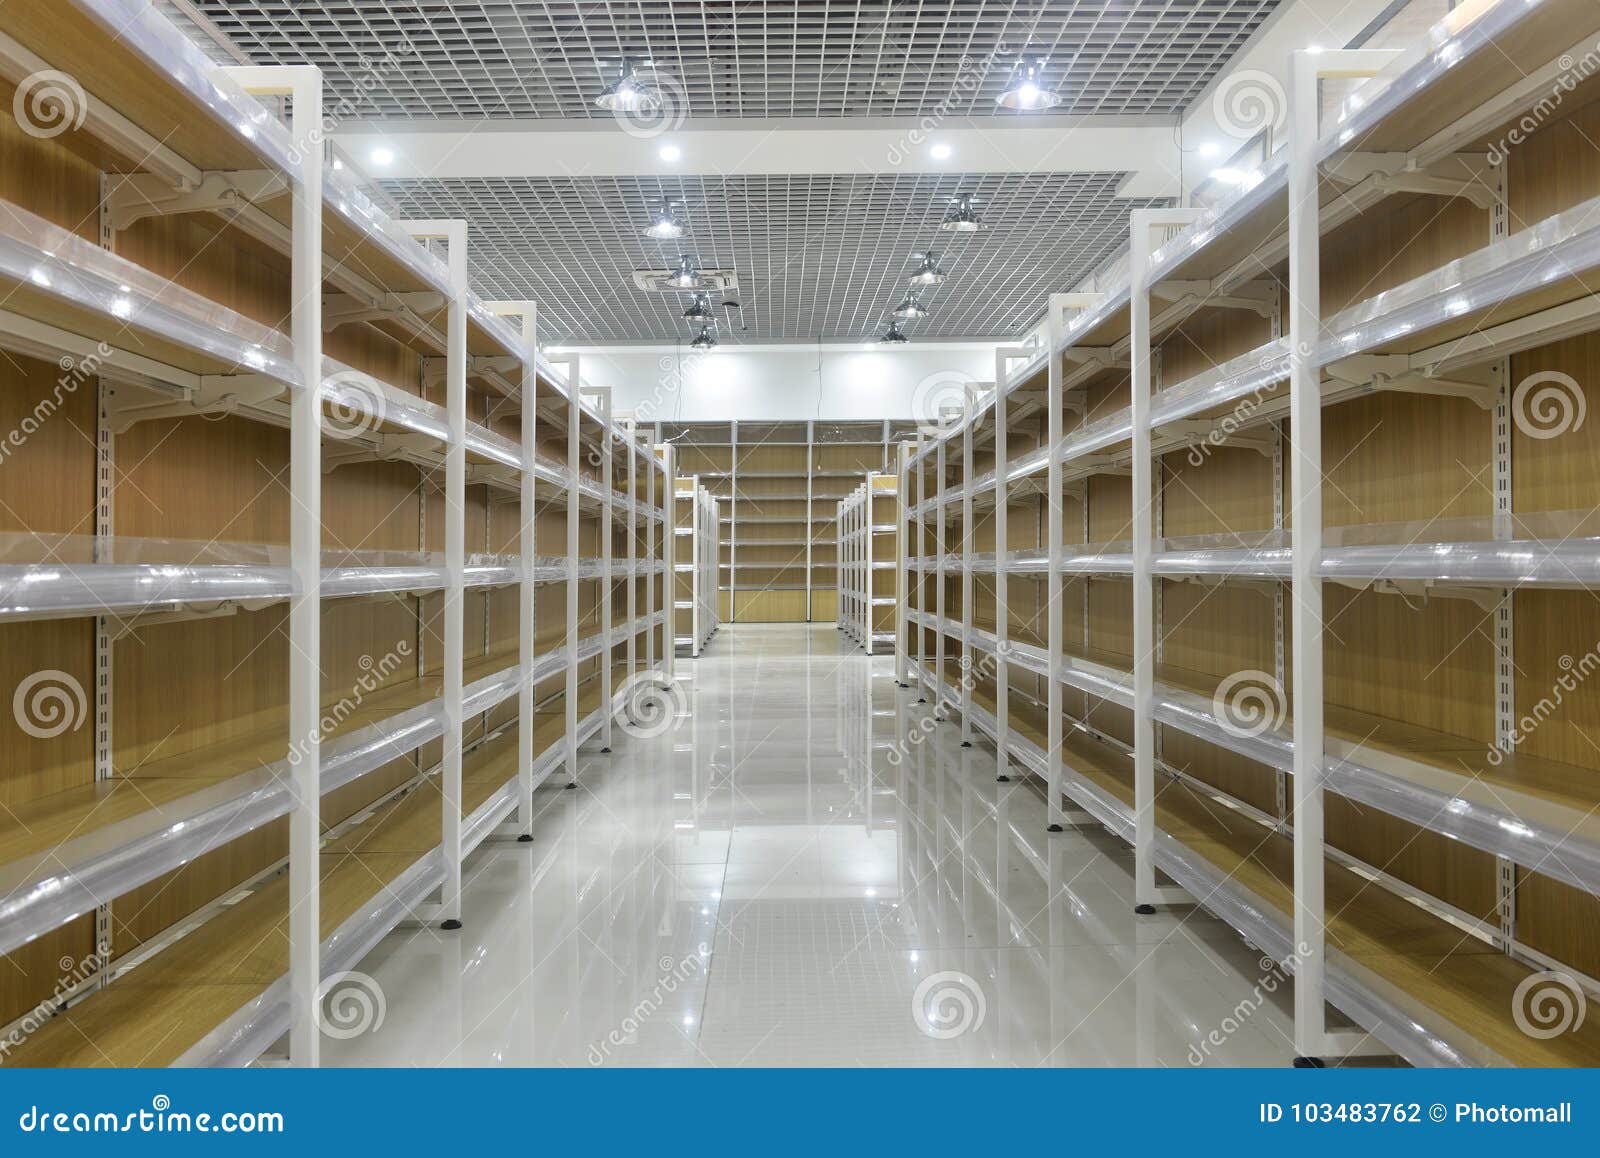 empty shelves of supermarket interior